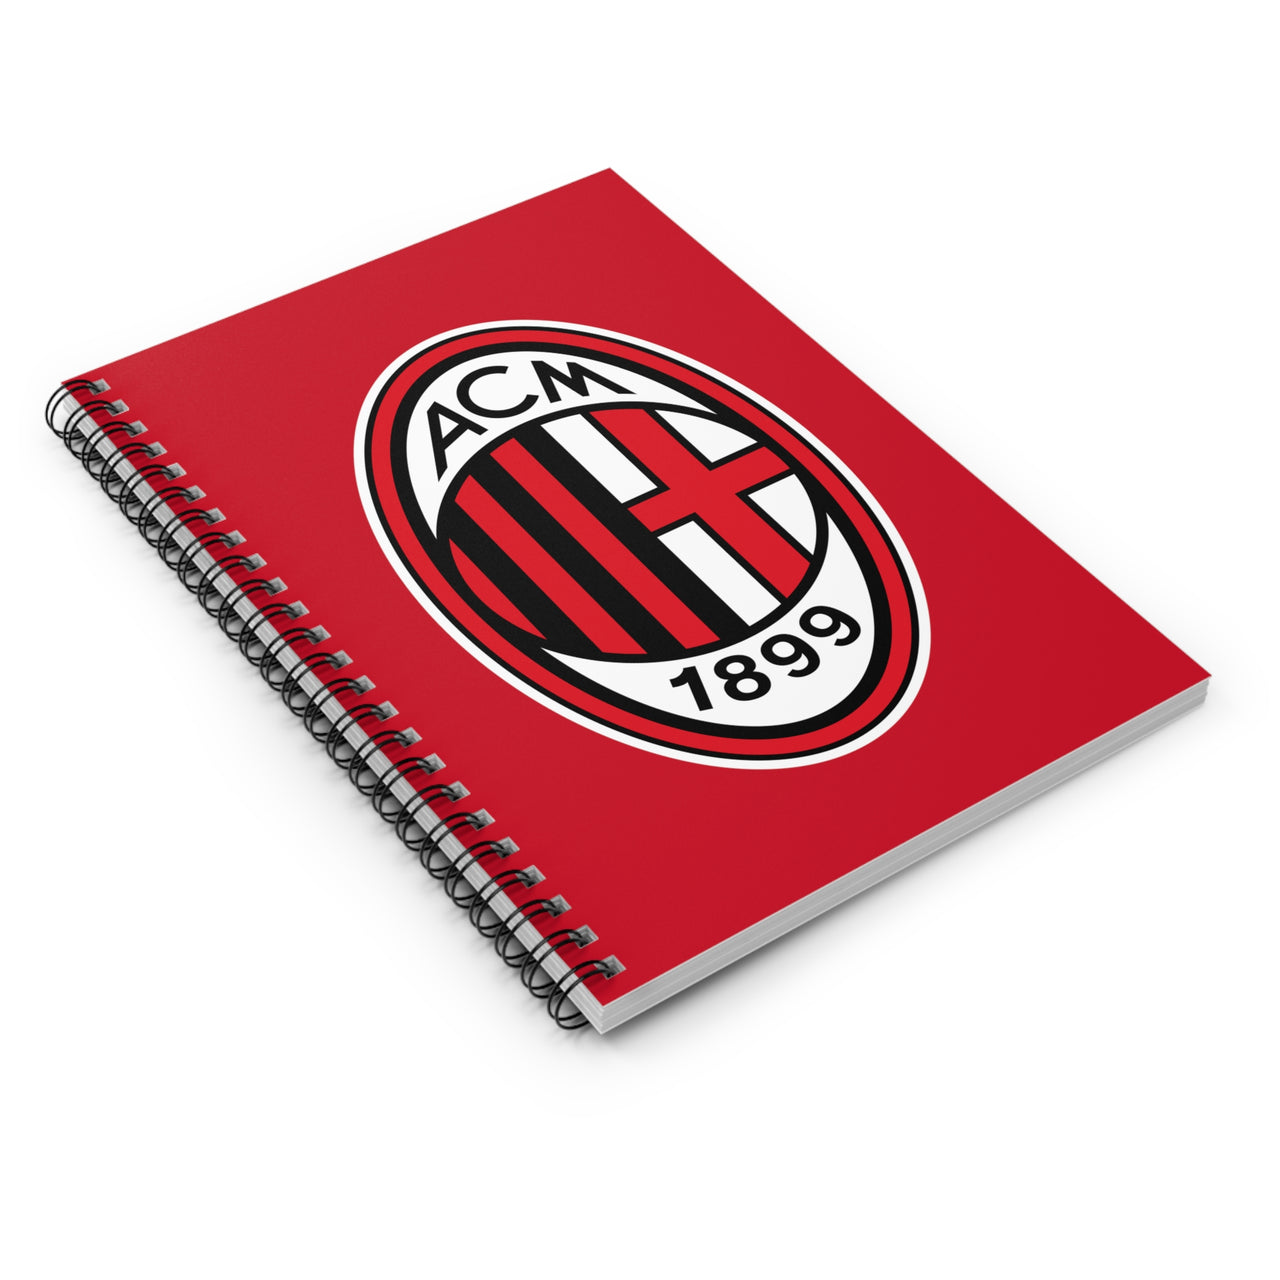 AC Milan Spiral Notebook - Ruled Line